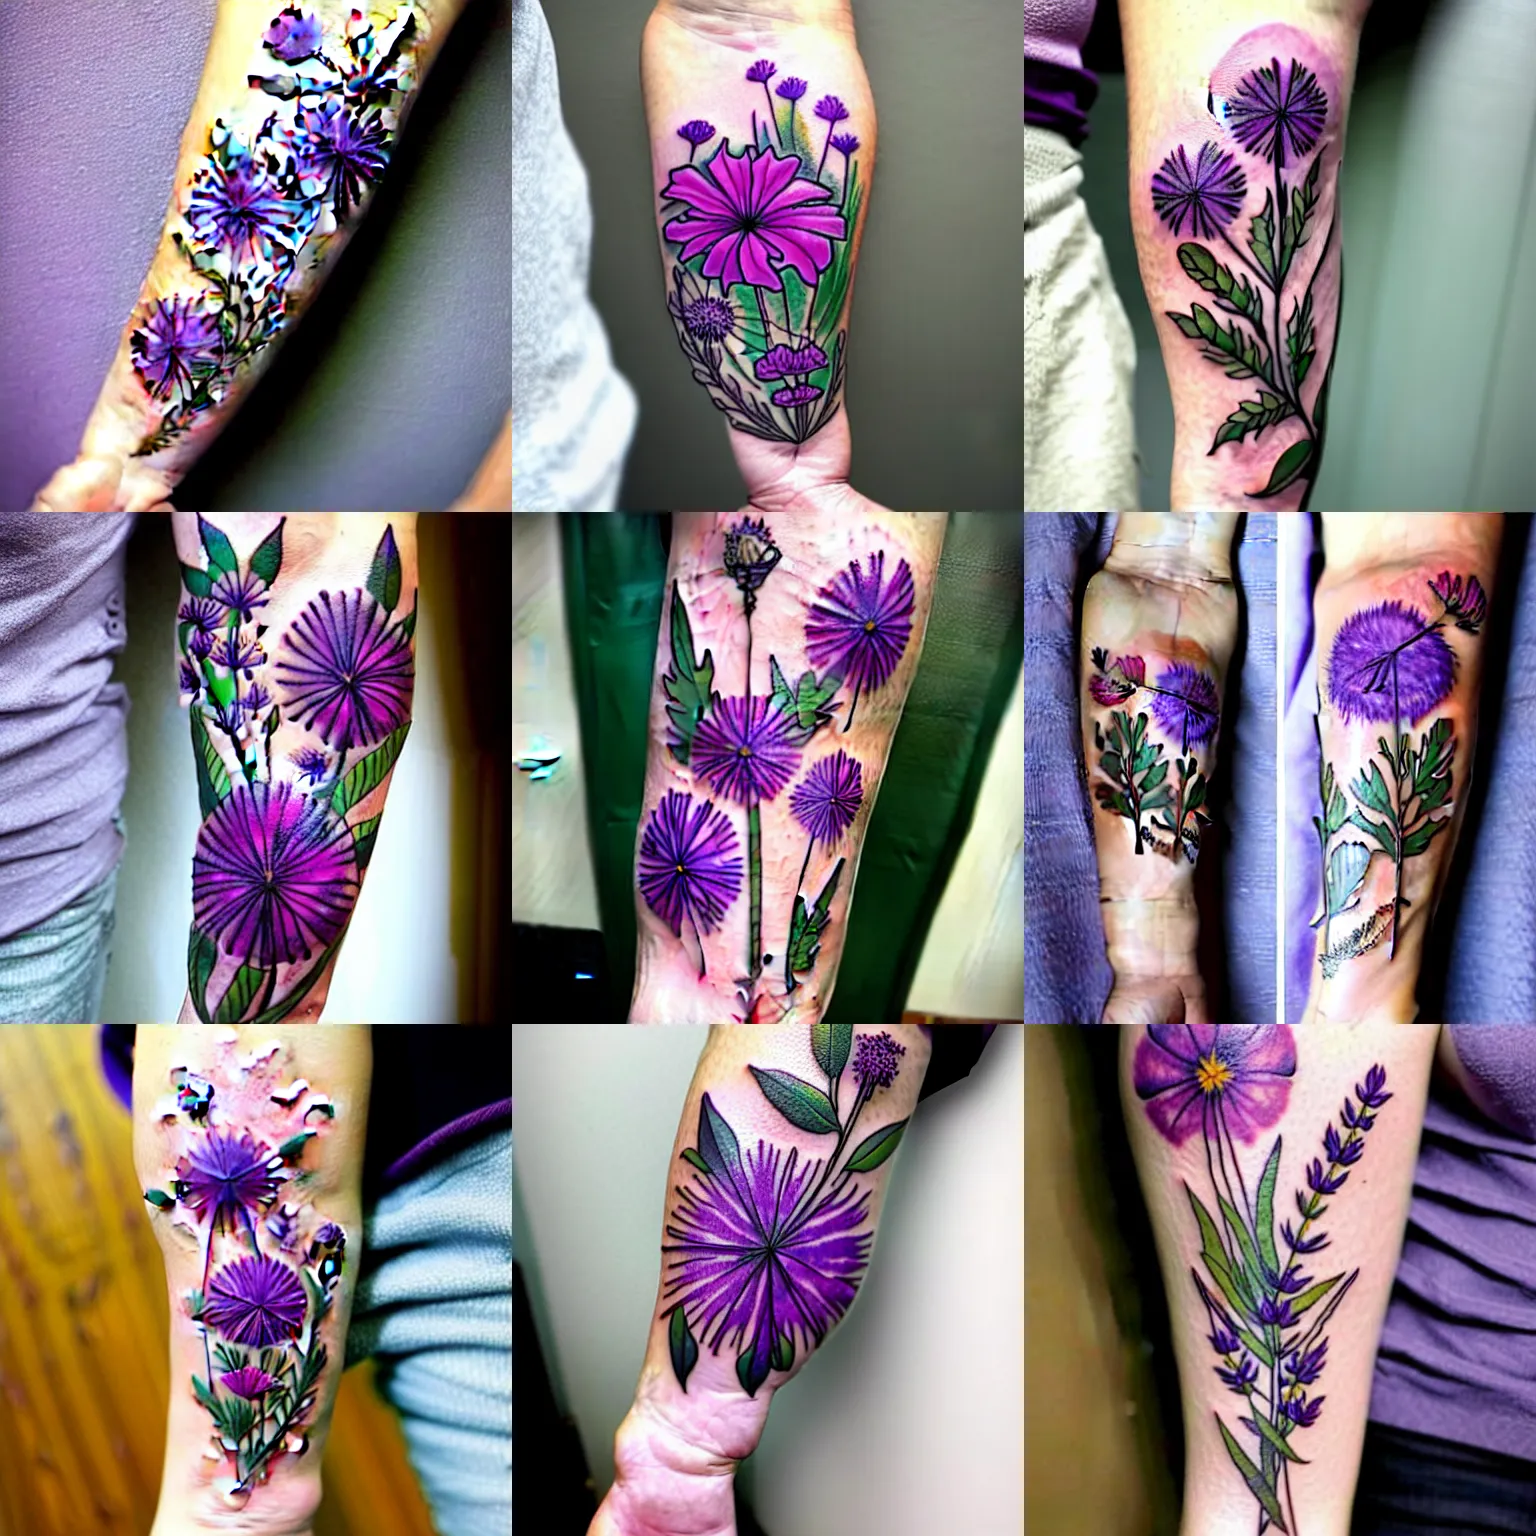 Multi-coloured Flowers Temporary Tattoo Waterproof Body Art Tattoo Sticker  | eBay